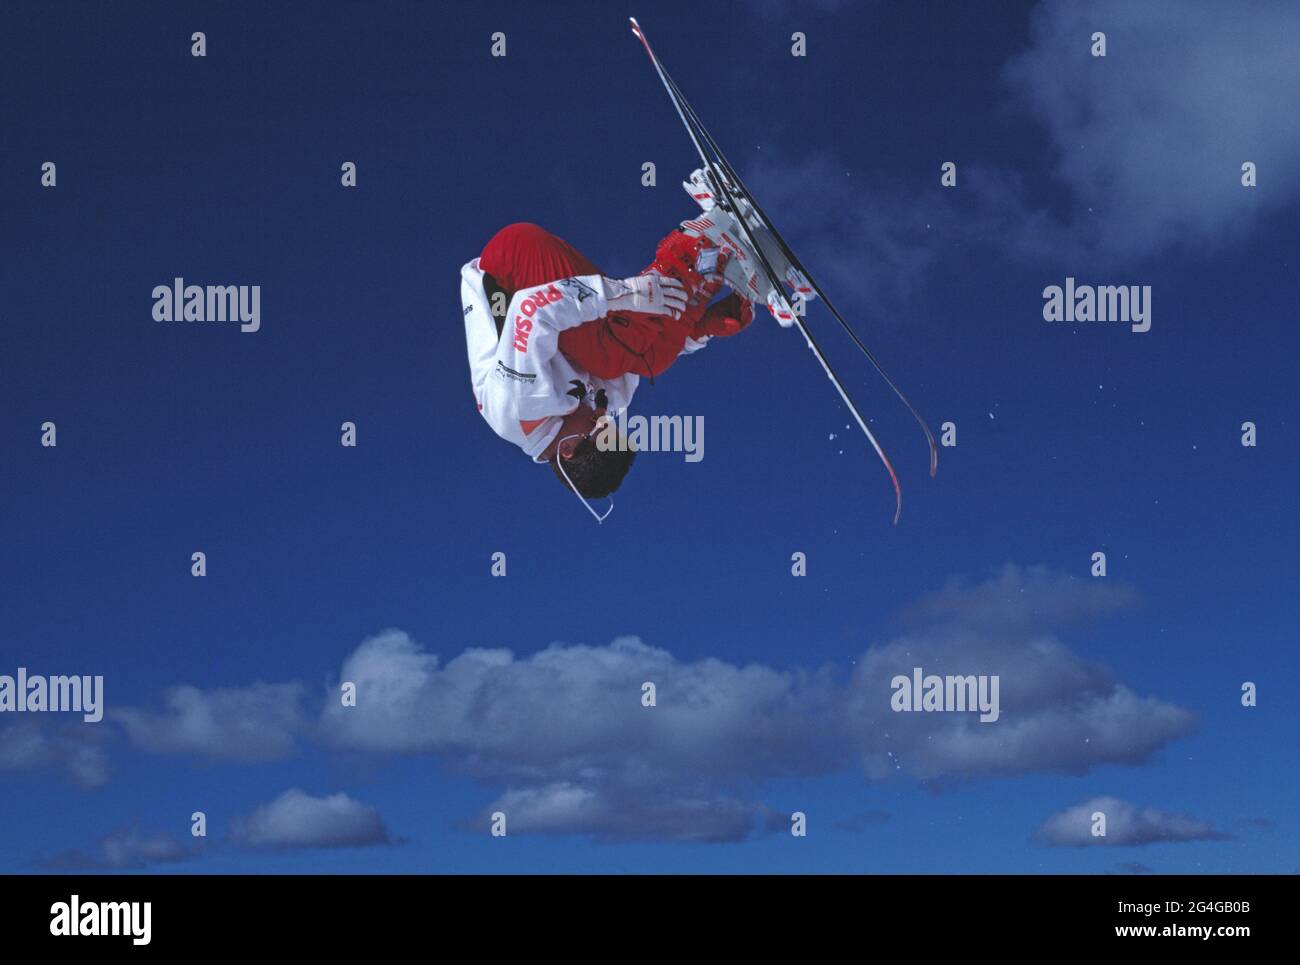 Australia. Snow skiing. Ski somersault. Stock Photo